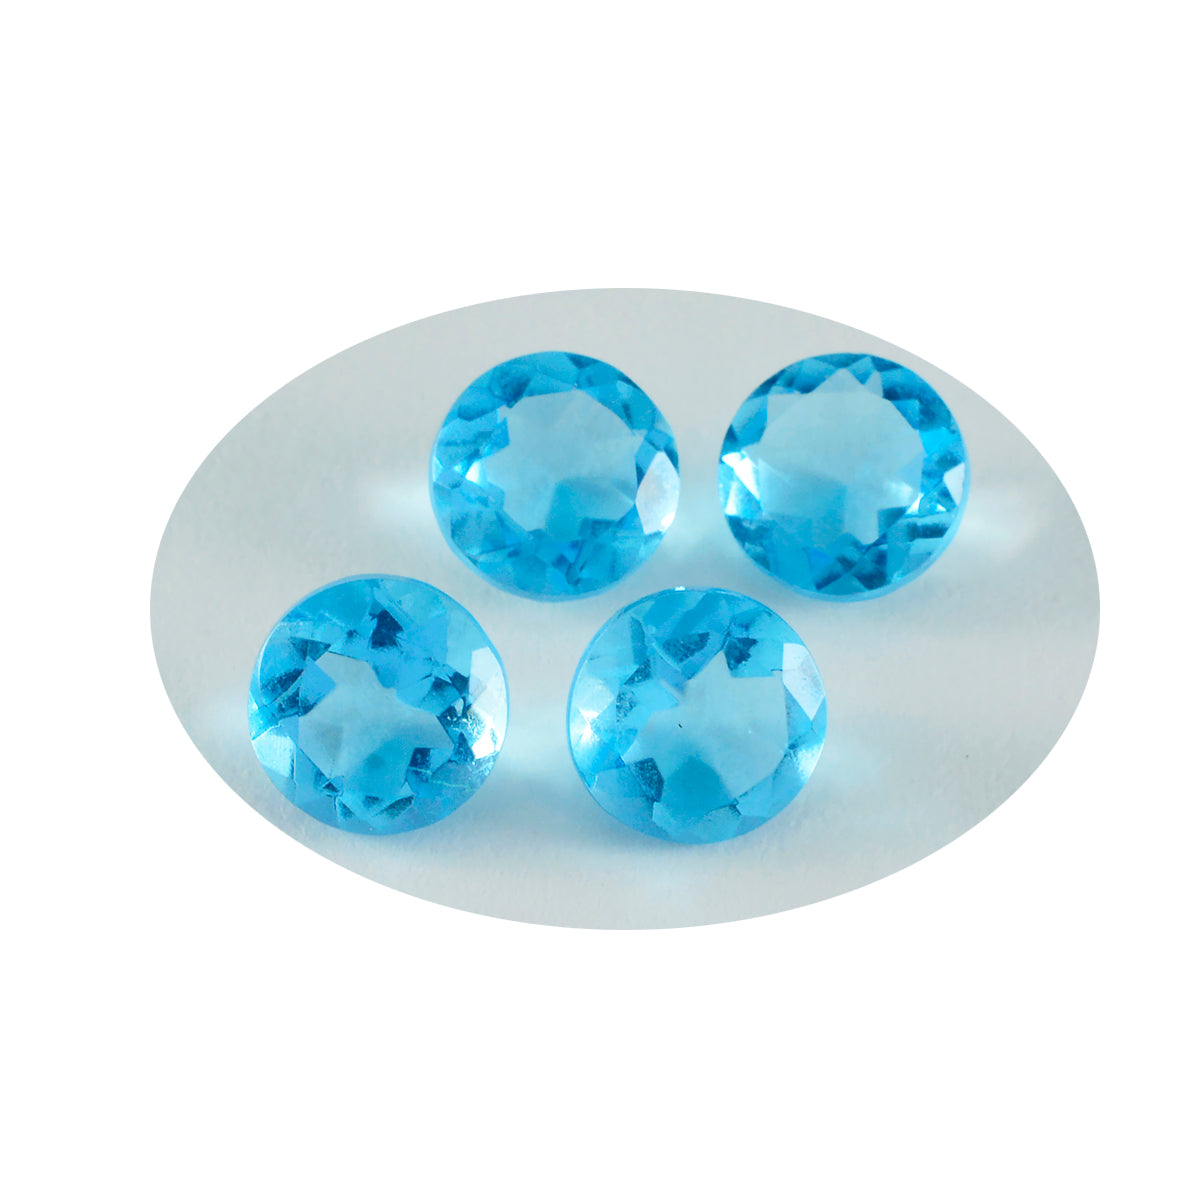 Riyogems 1PC Blue Topaz CZ Faceted 14x14 mm Round Shape A1 Quality Loose Gems